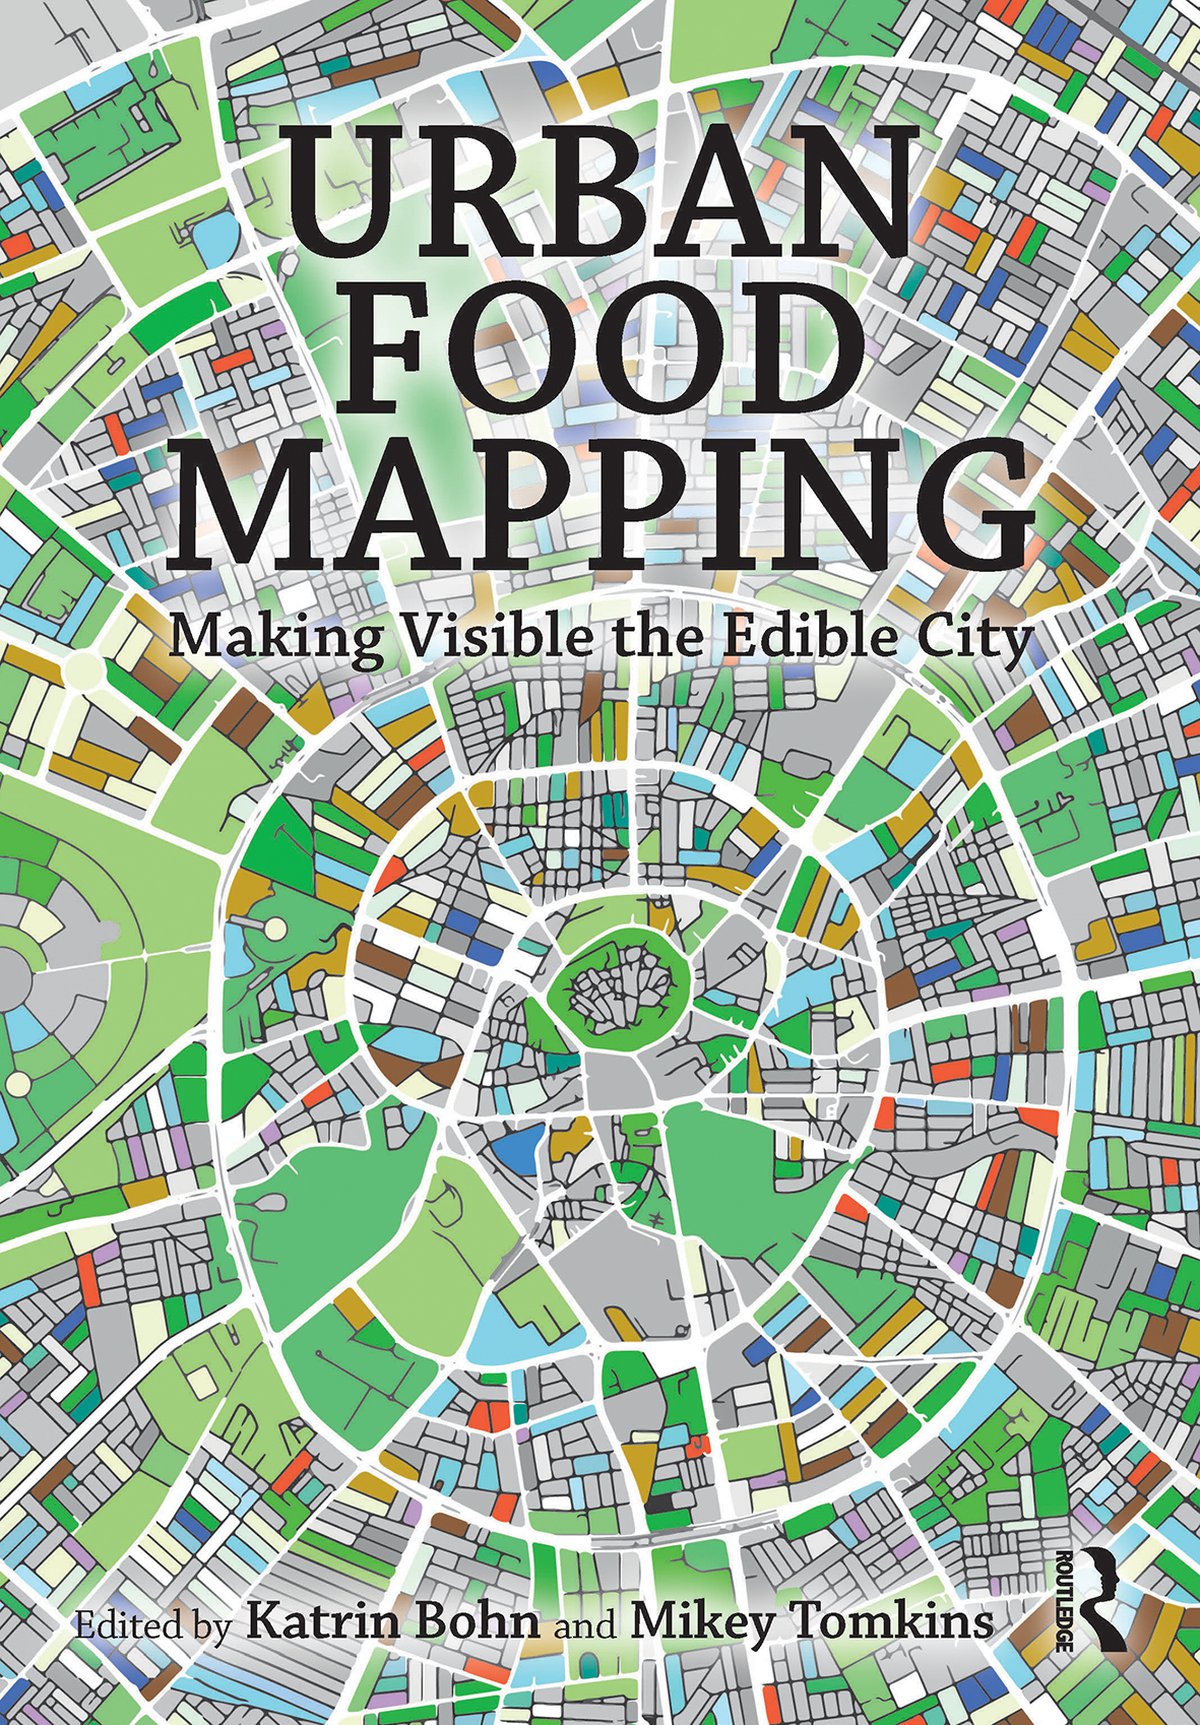 tomkins-routledge-urbanfoodmapping-cover-kl2mb-rgb-24128.jpg